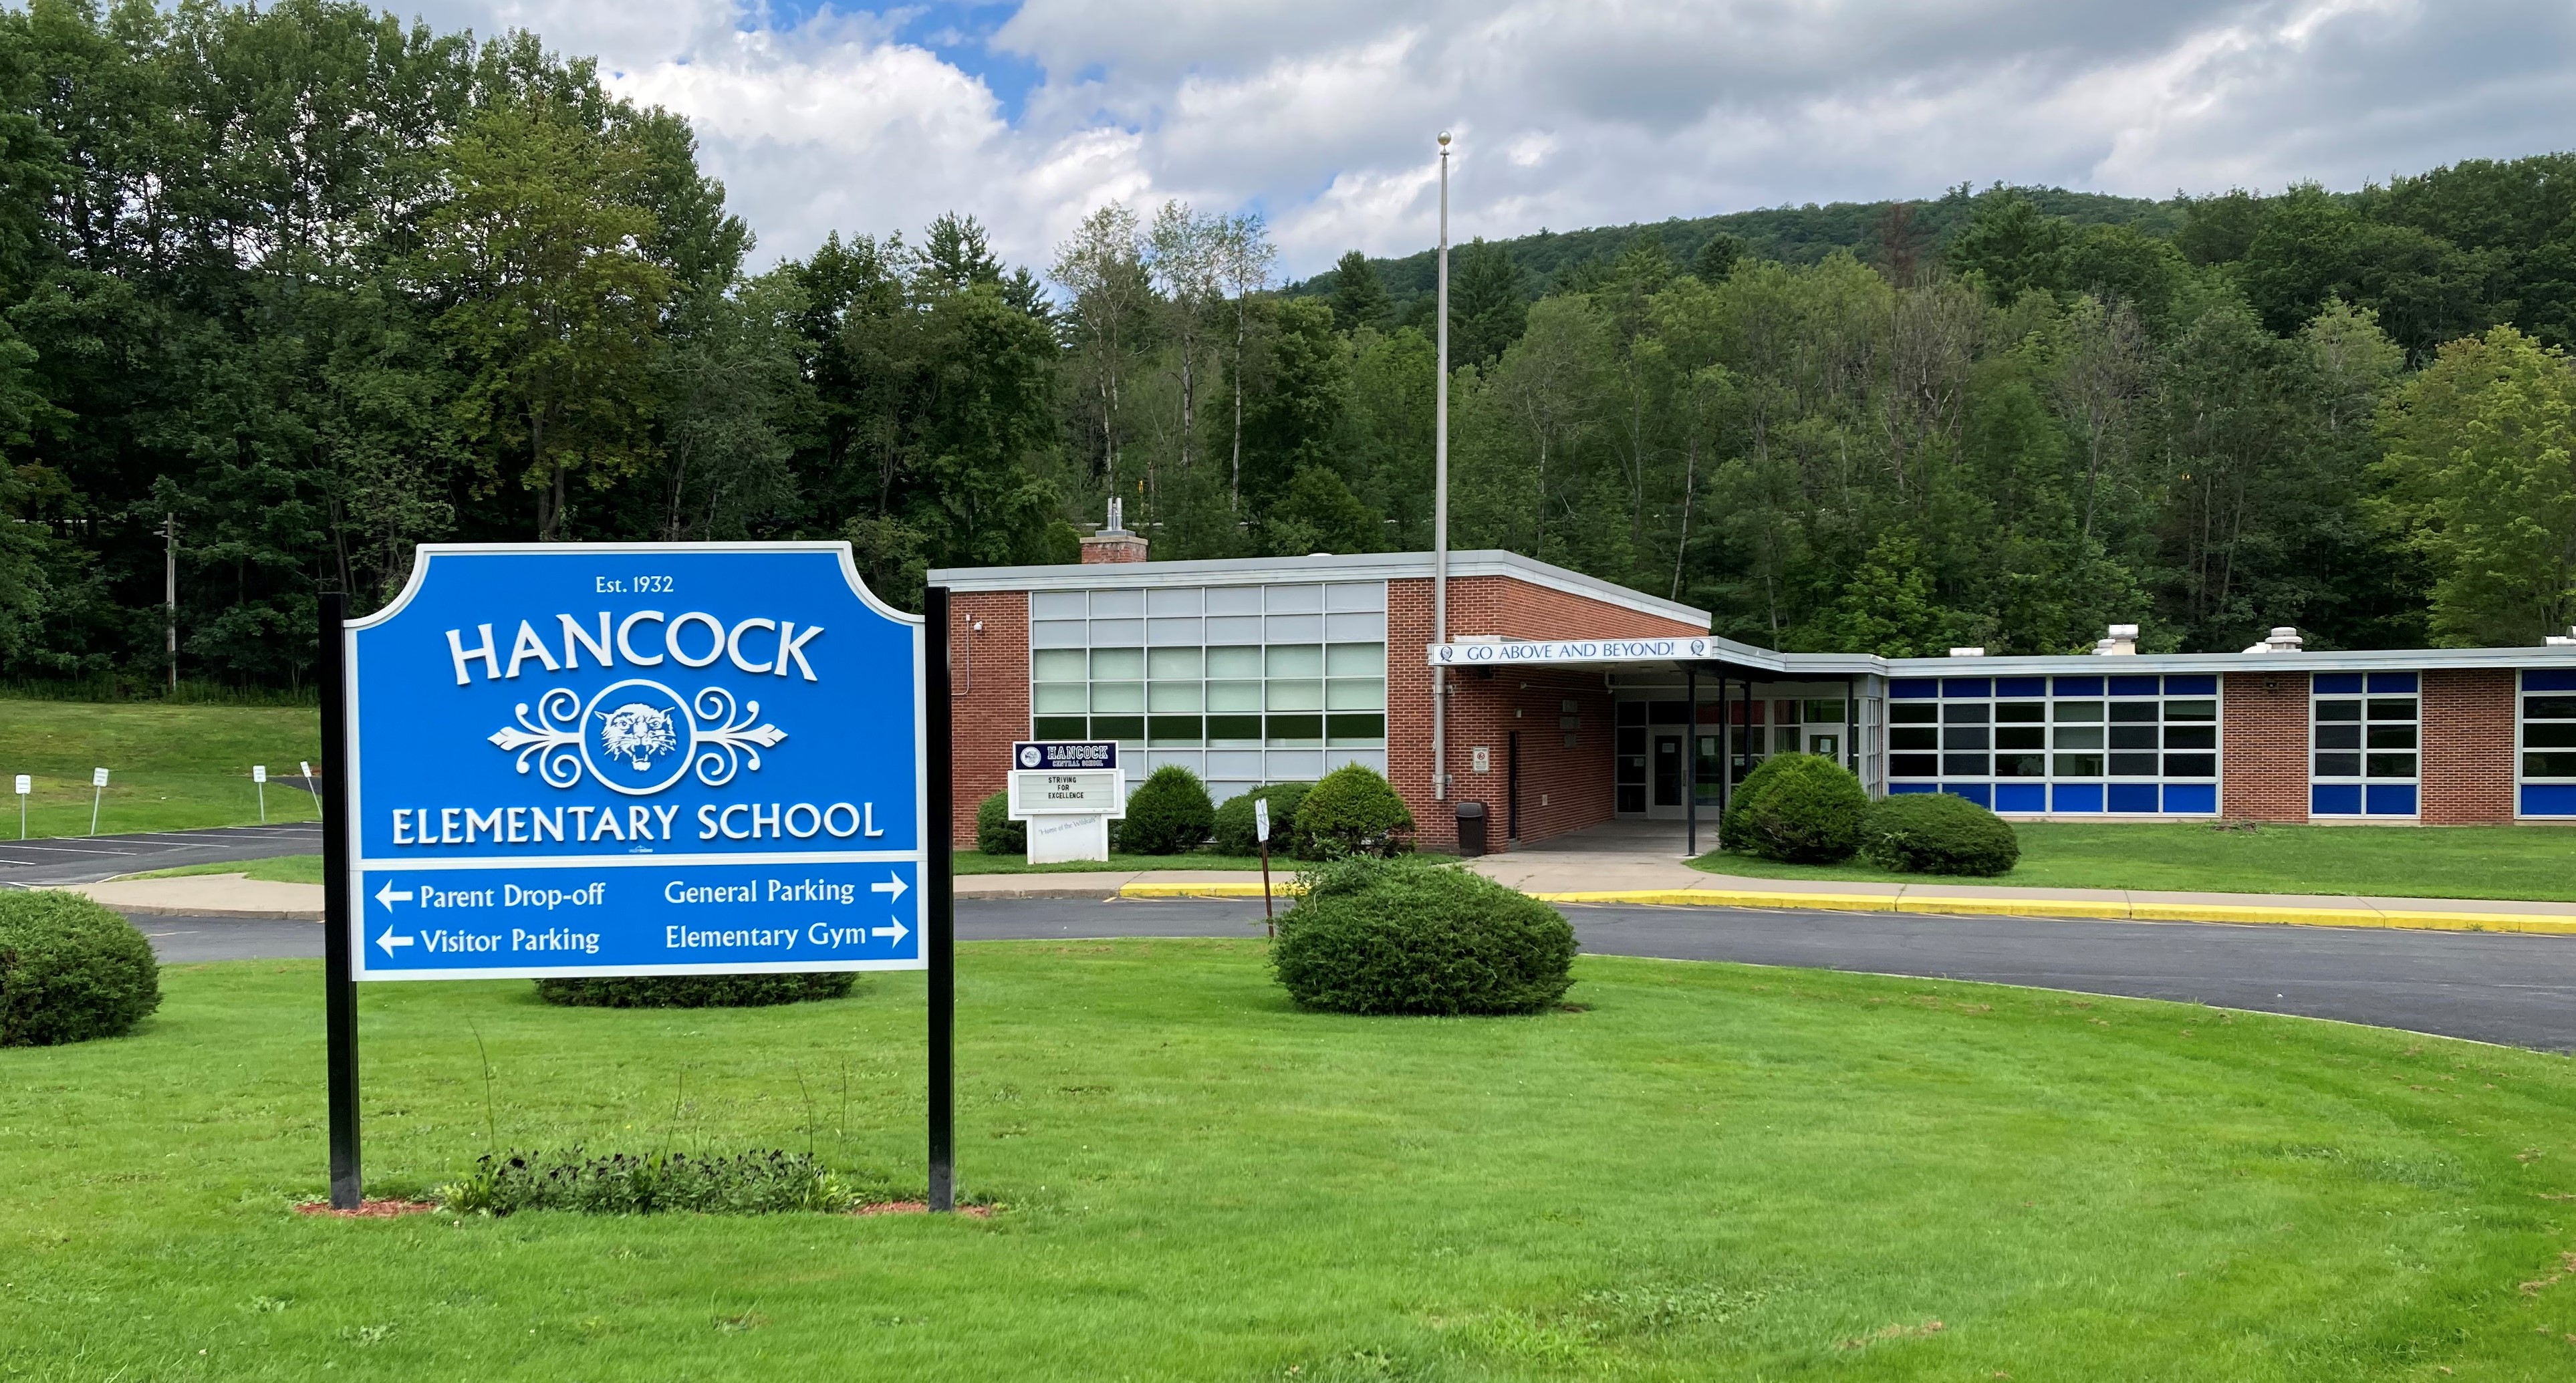 Hancock Elementary School